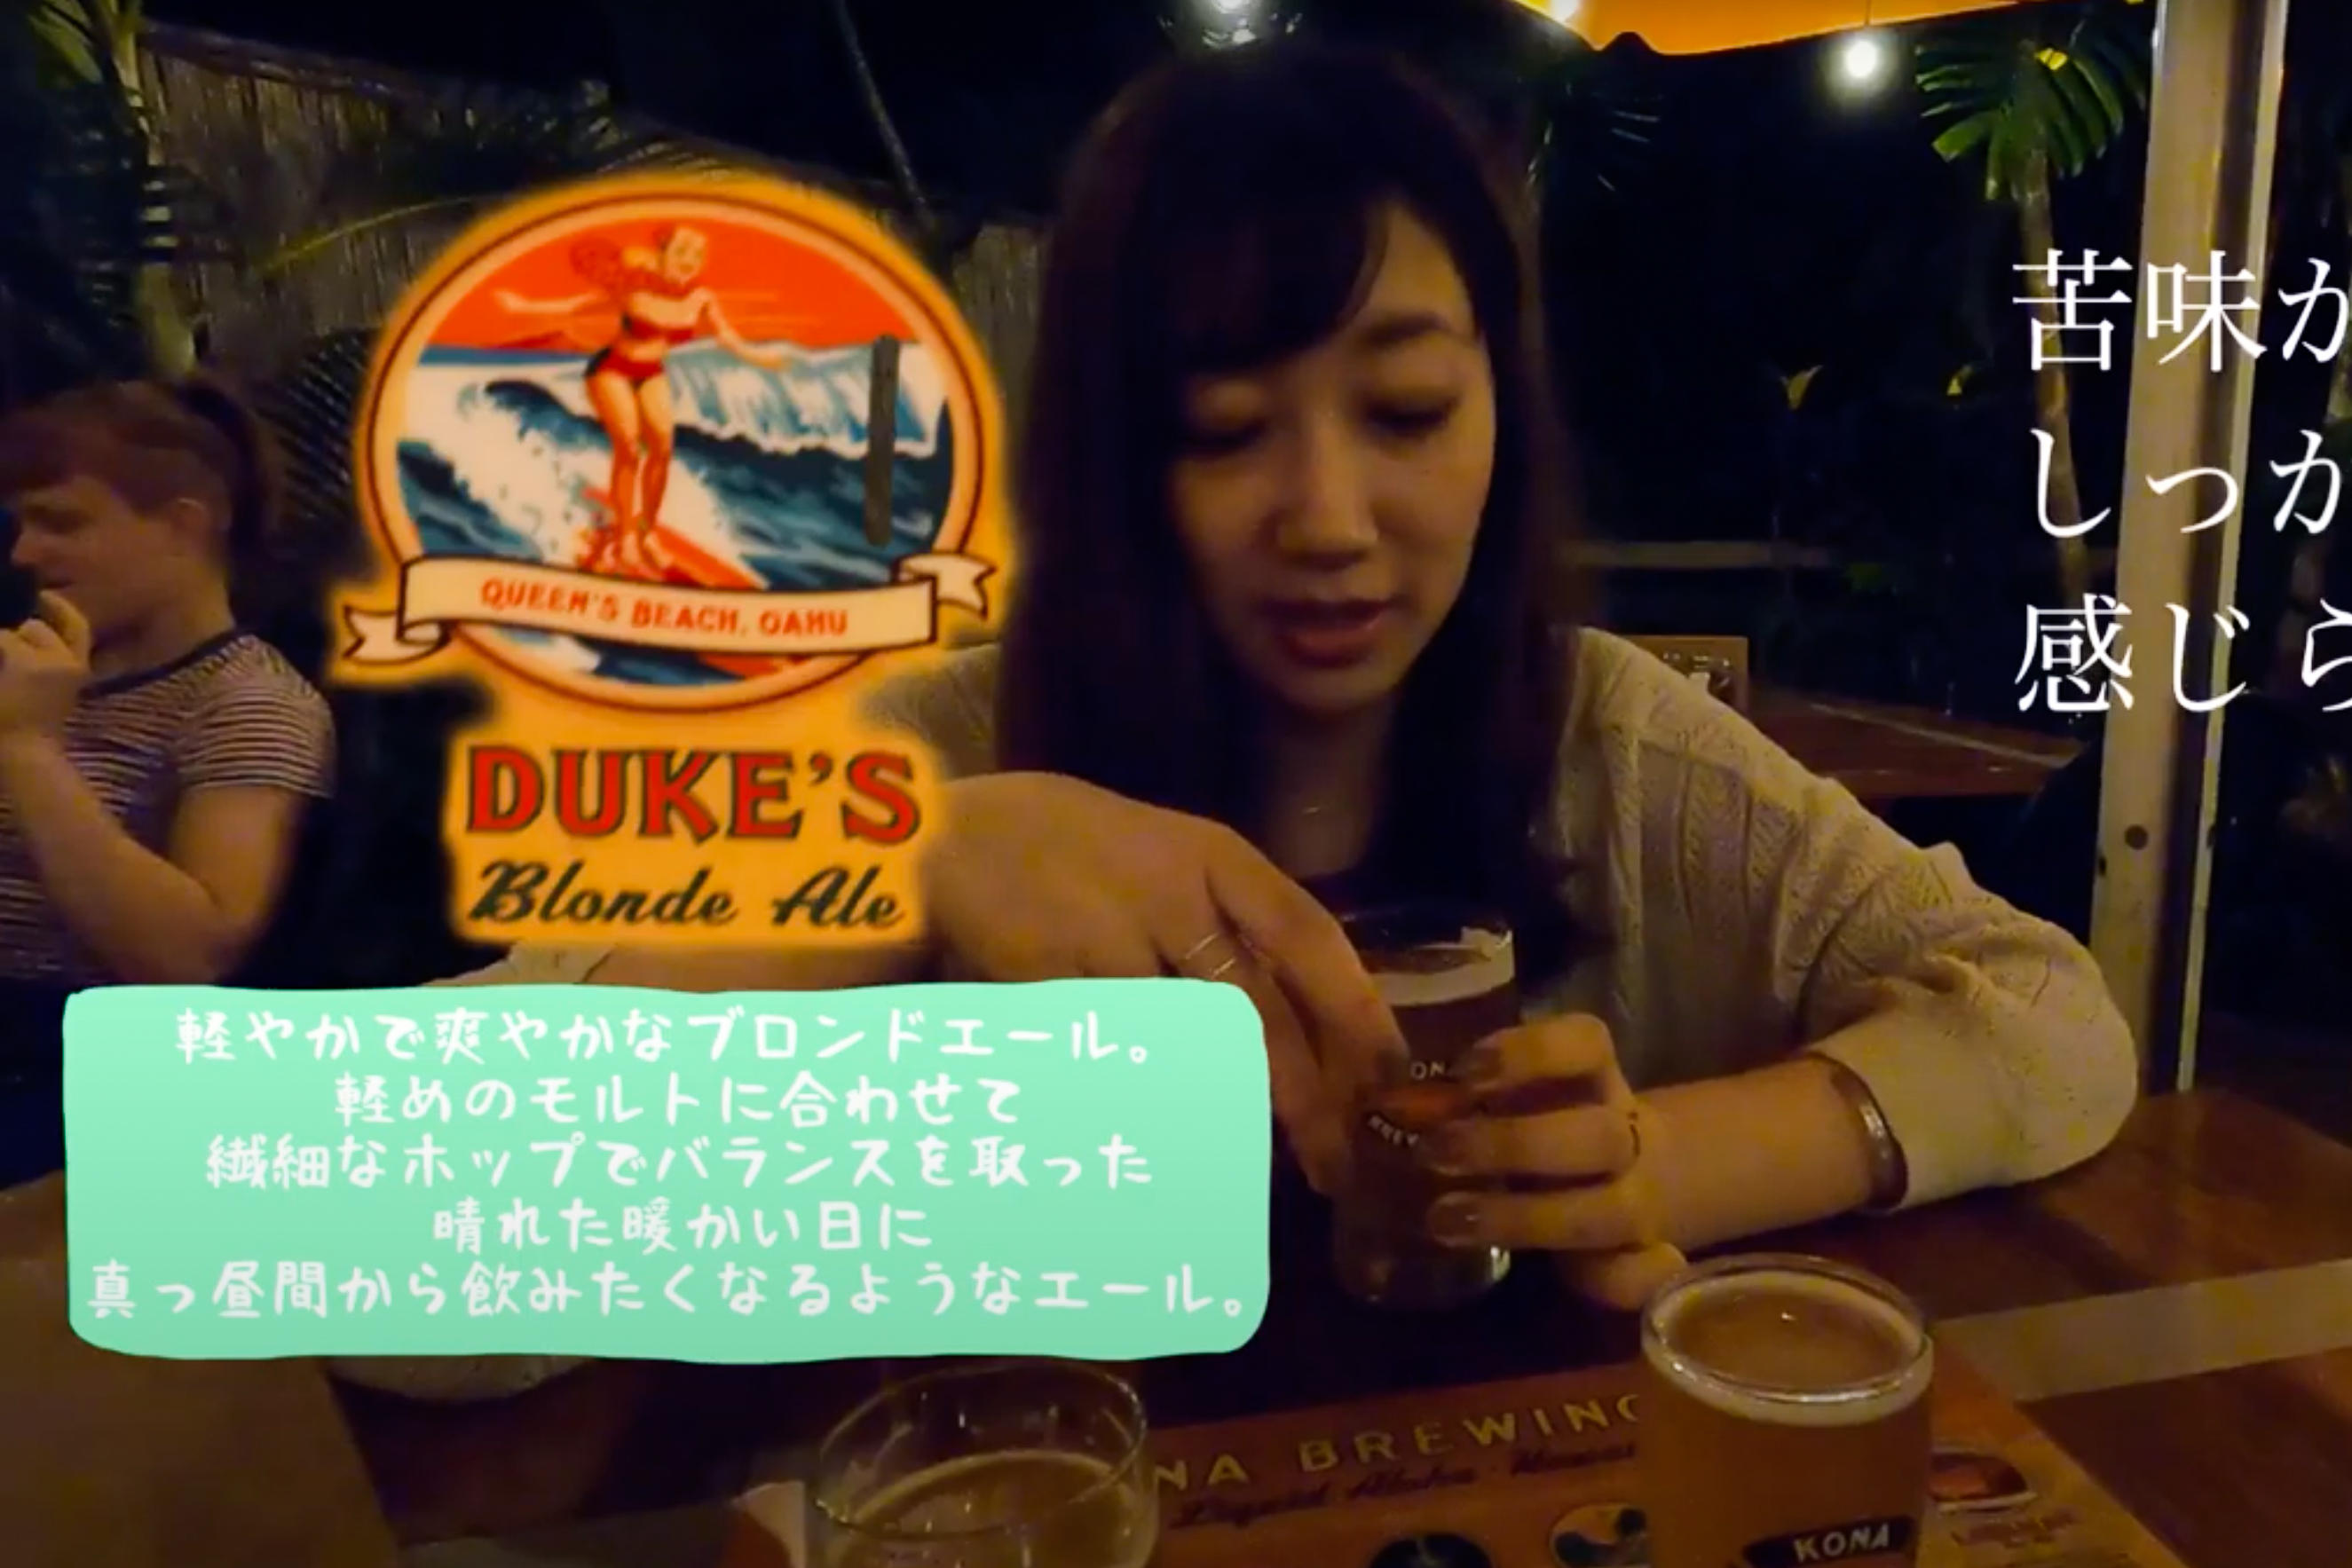 kona_brewingfactory beer tasting DUKE'S